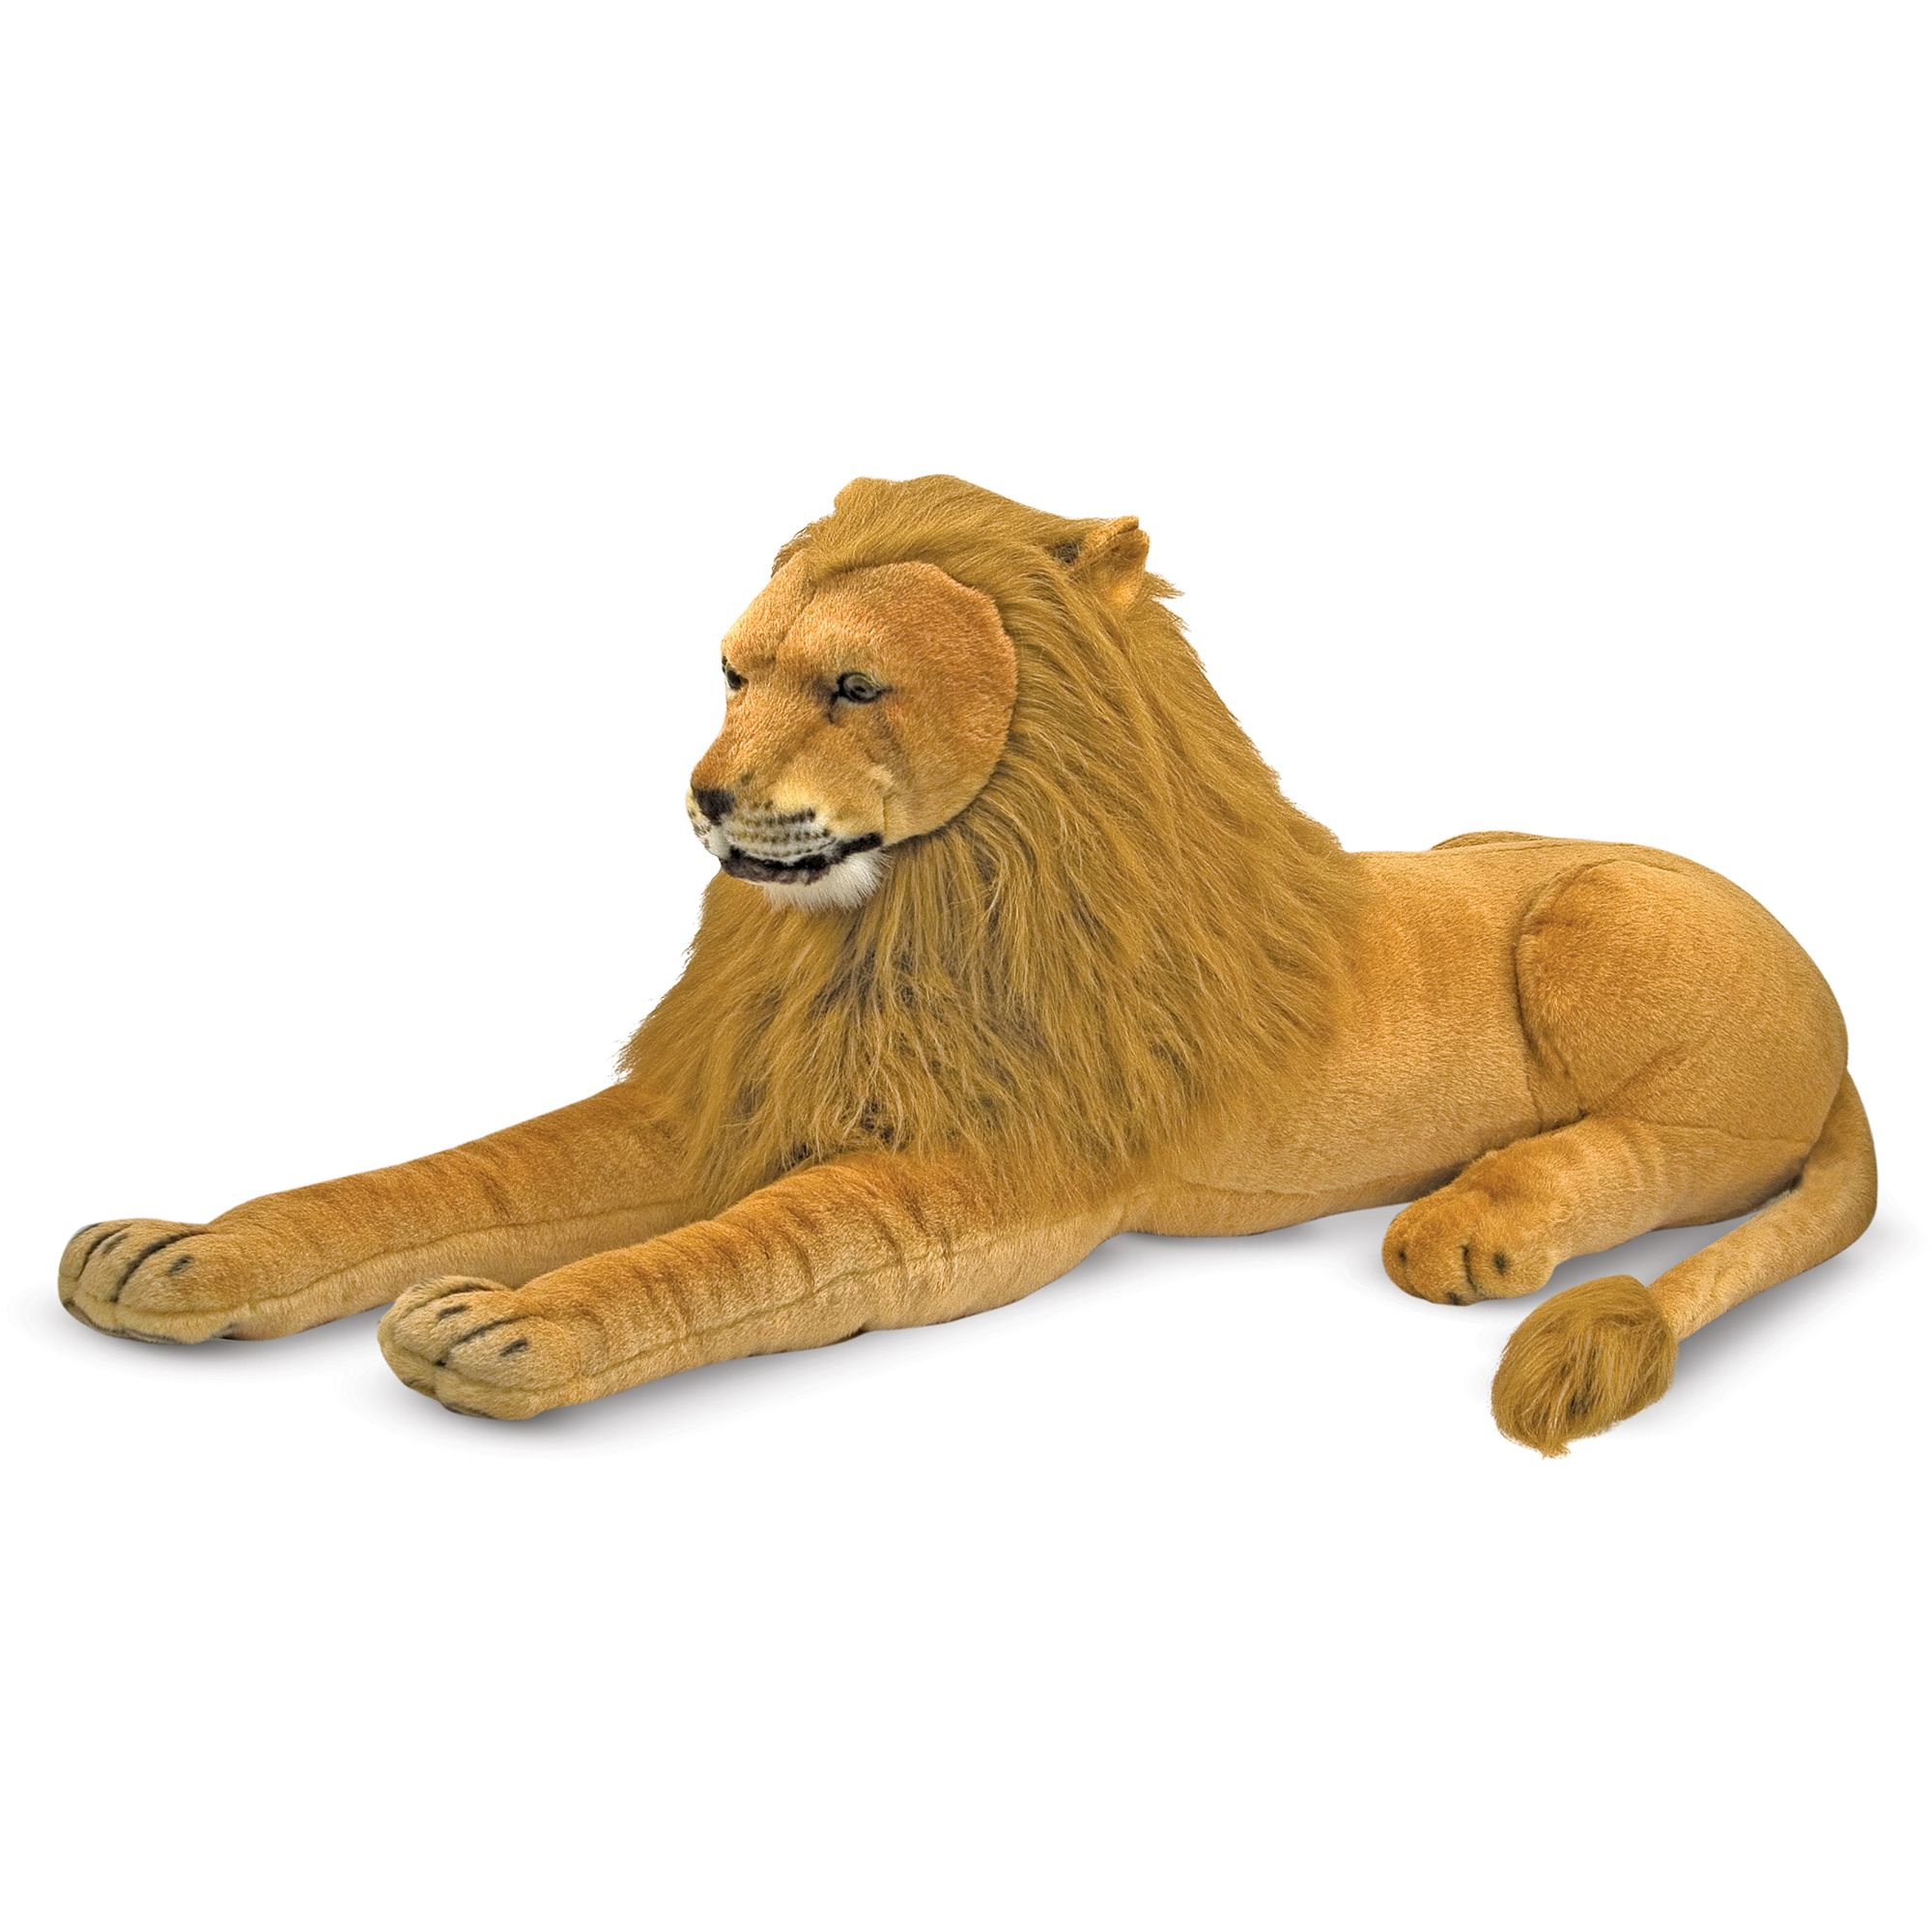 2102 Lion Giant Stuffed Animal